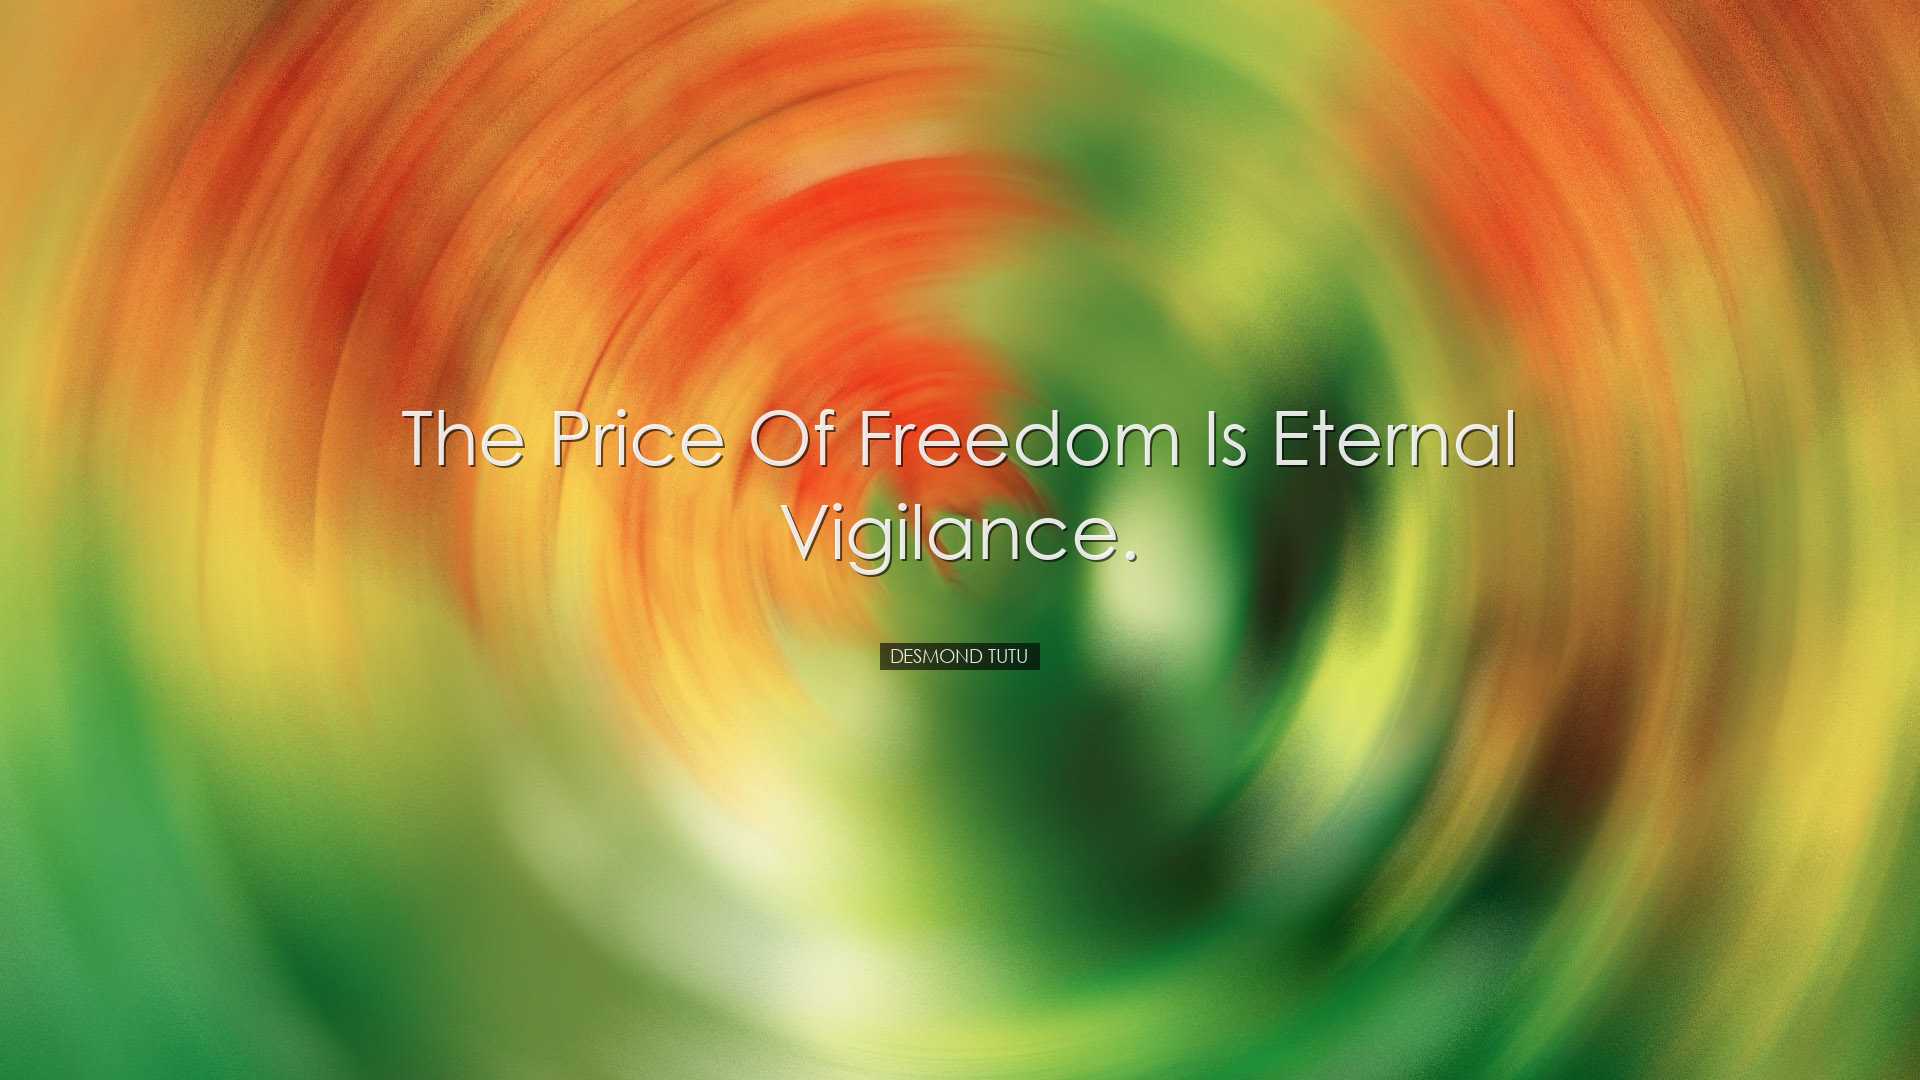 The price of freedom is eternal vigilance. - Desmond Tutu